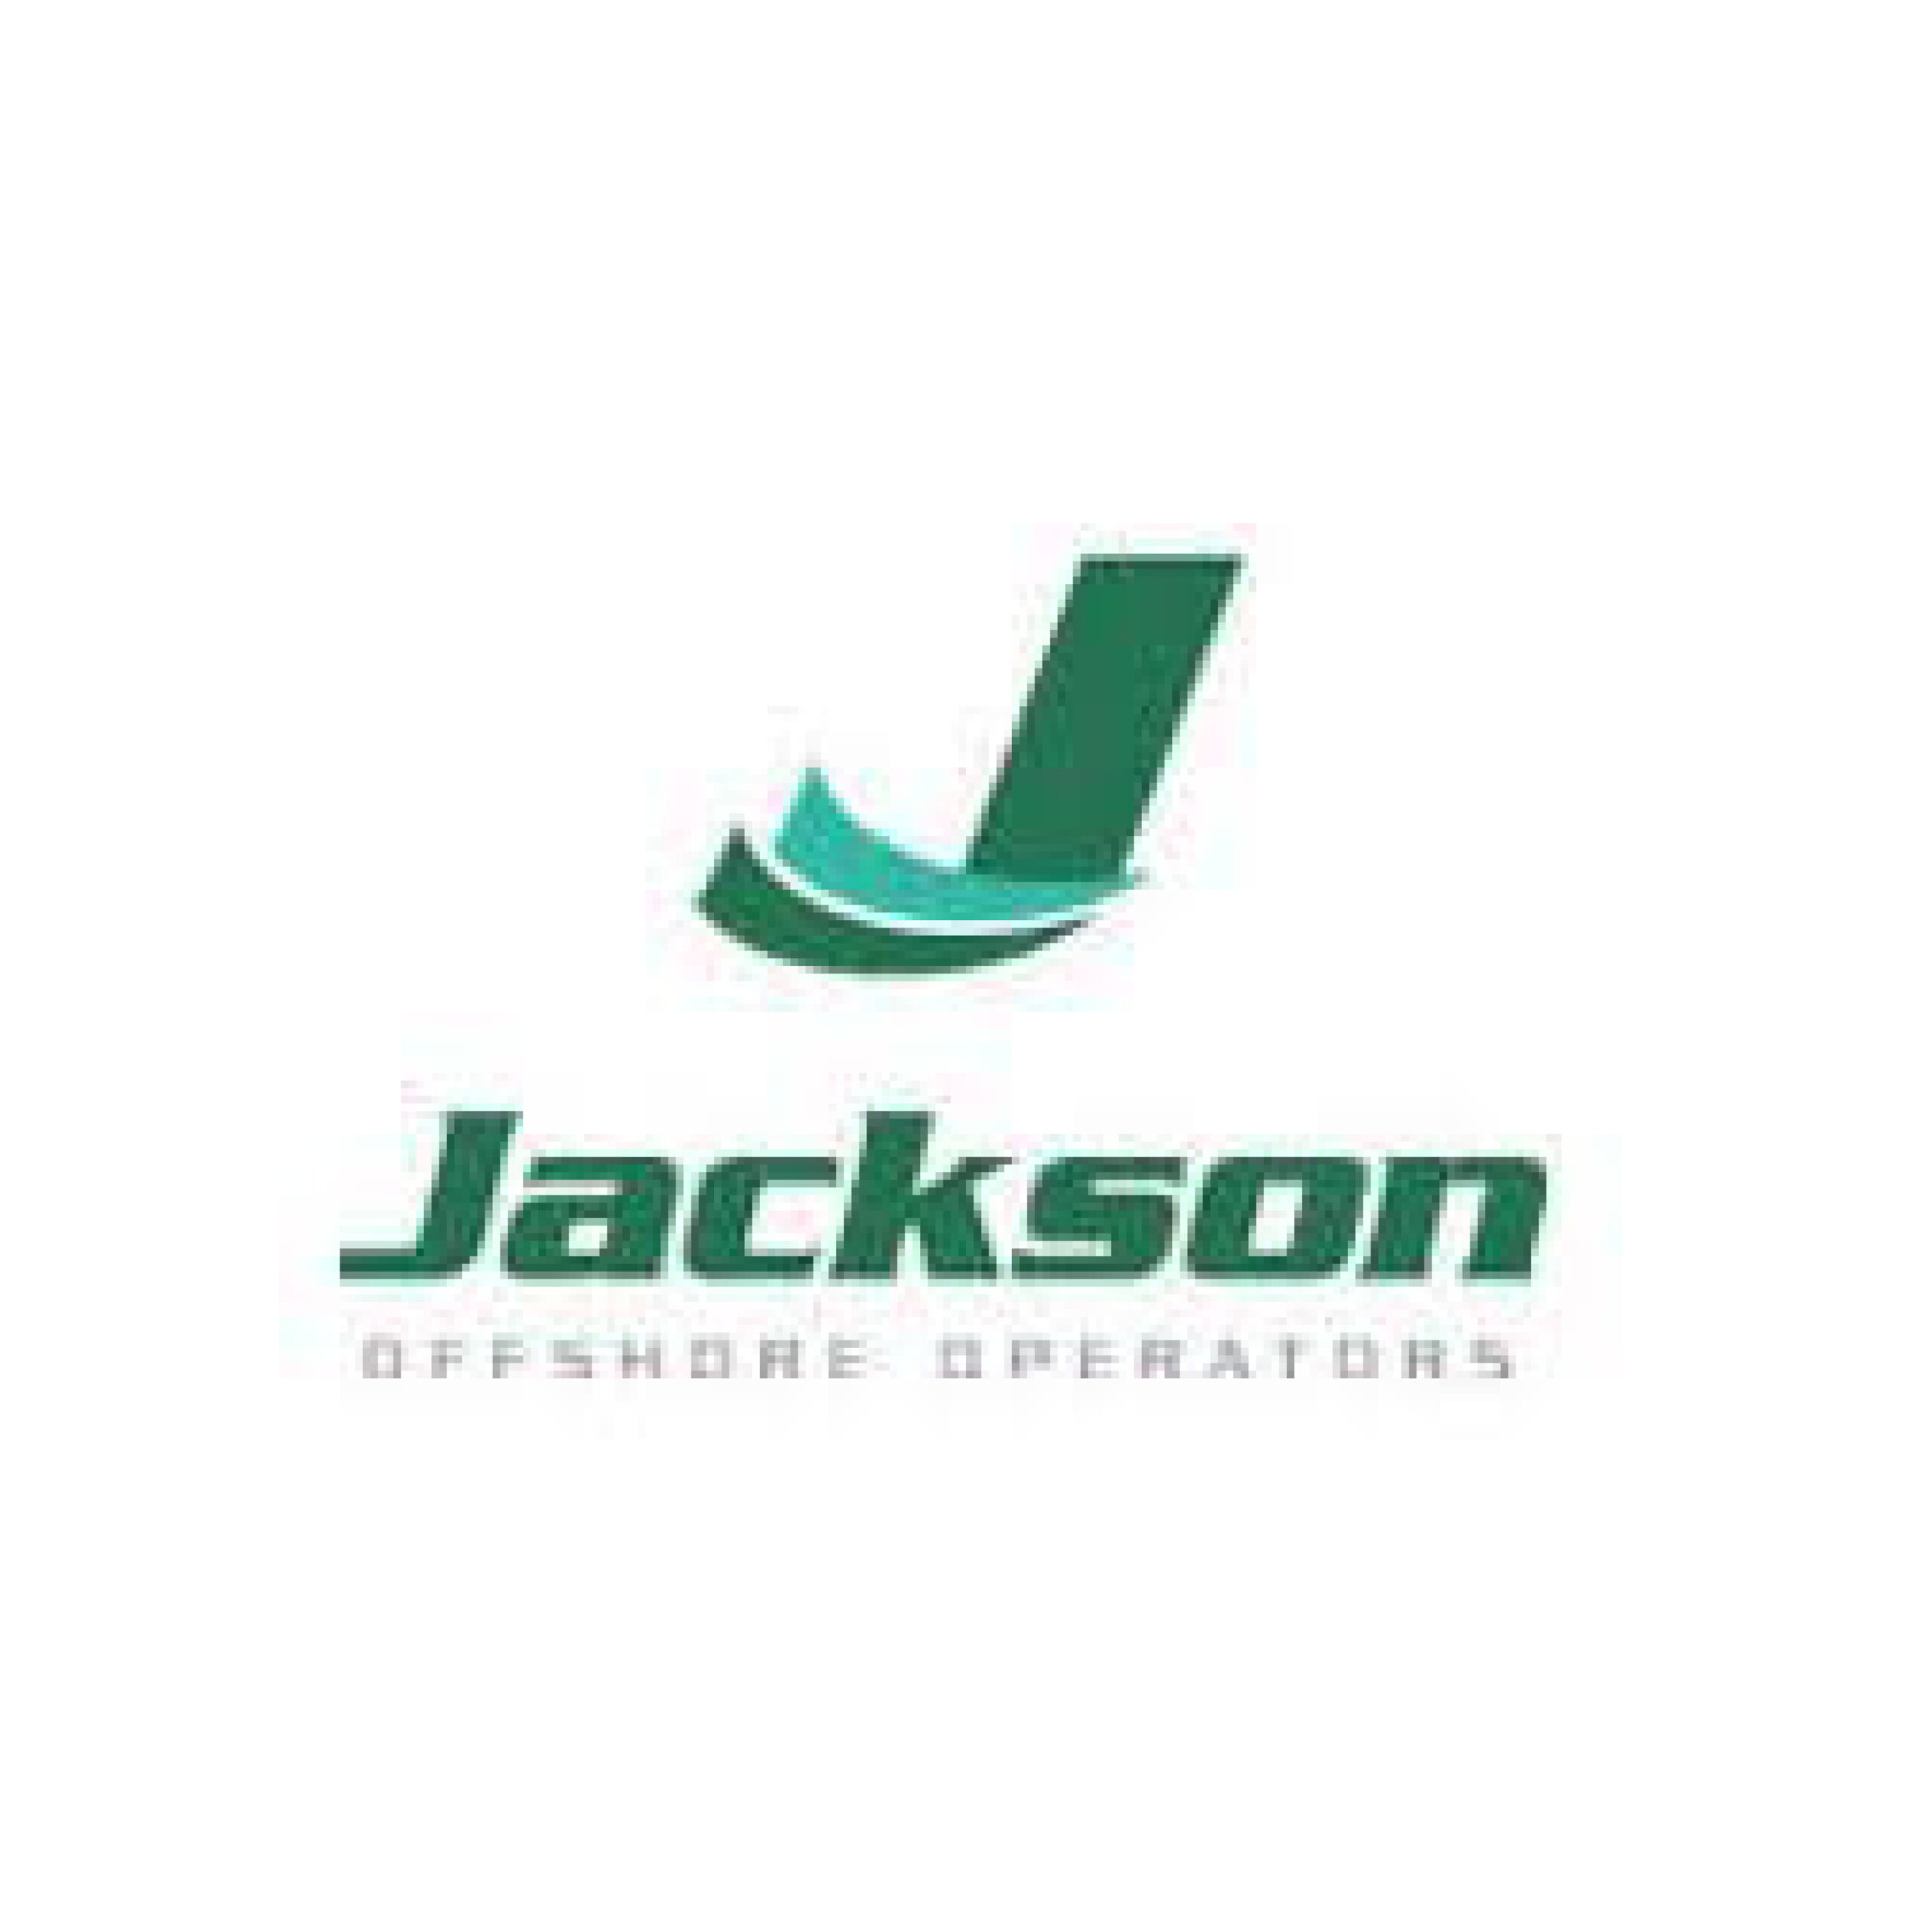 Jackson Offshore Operators